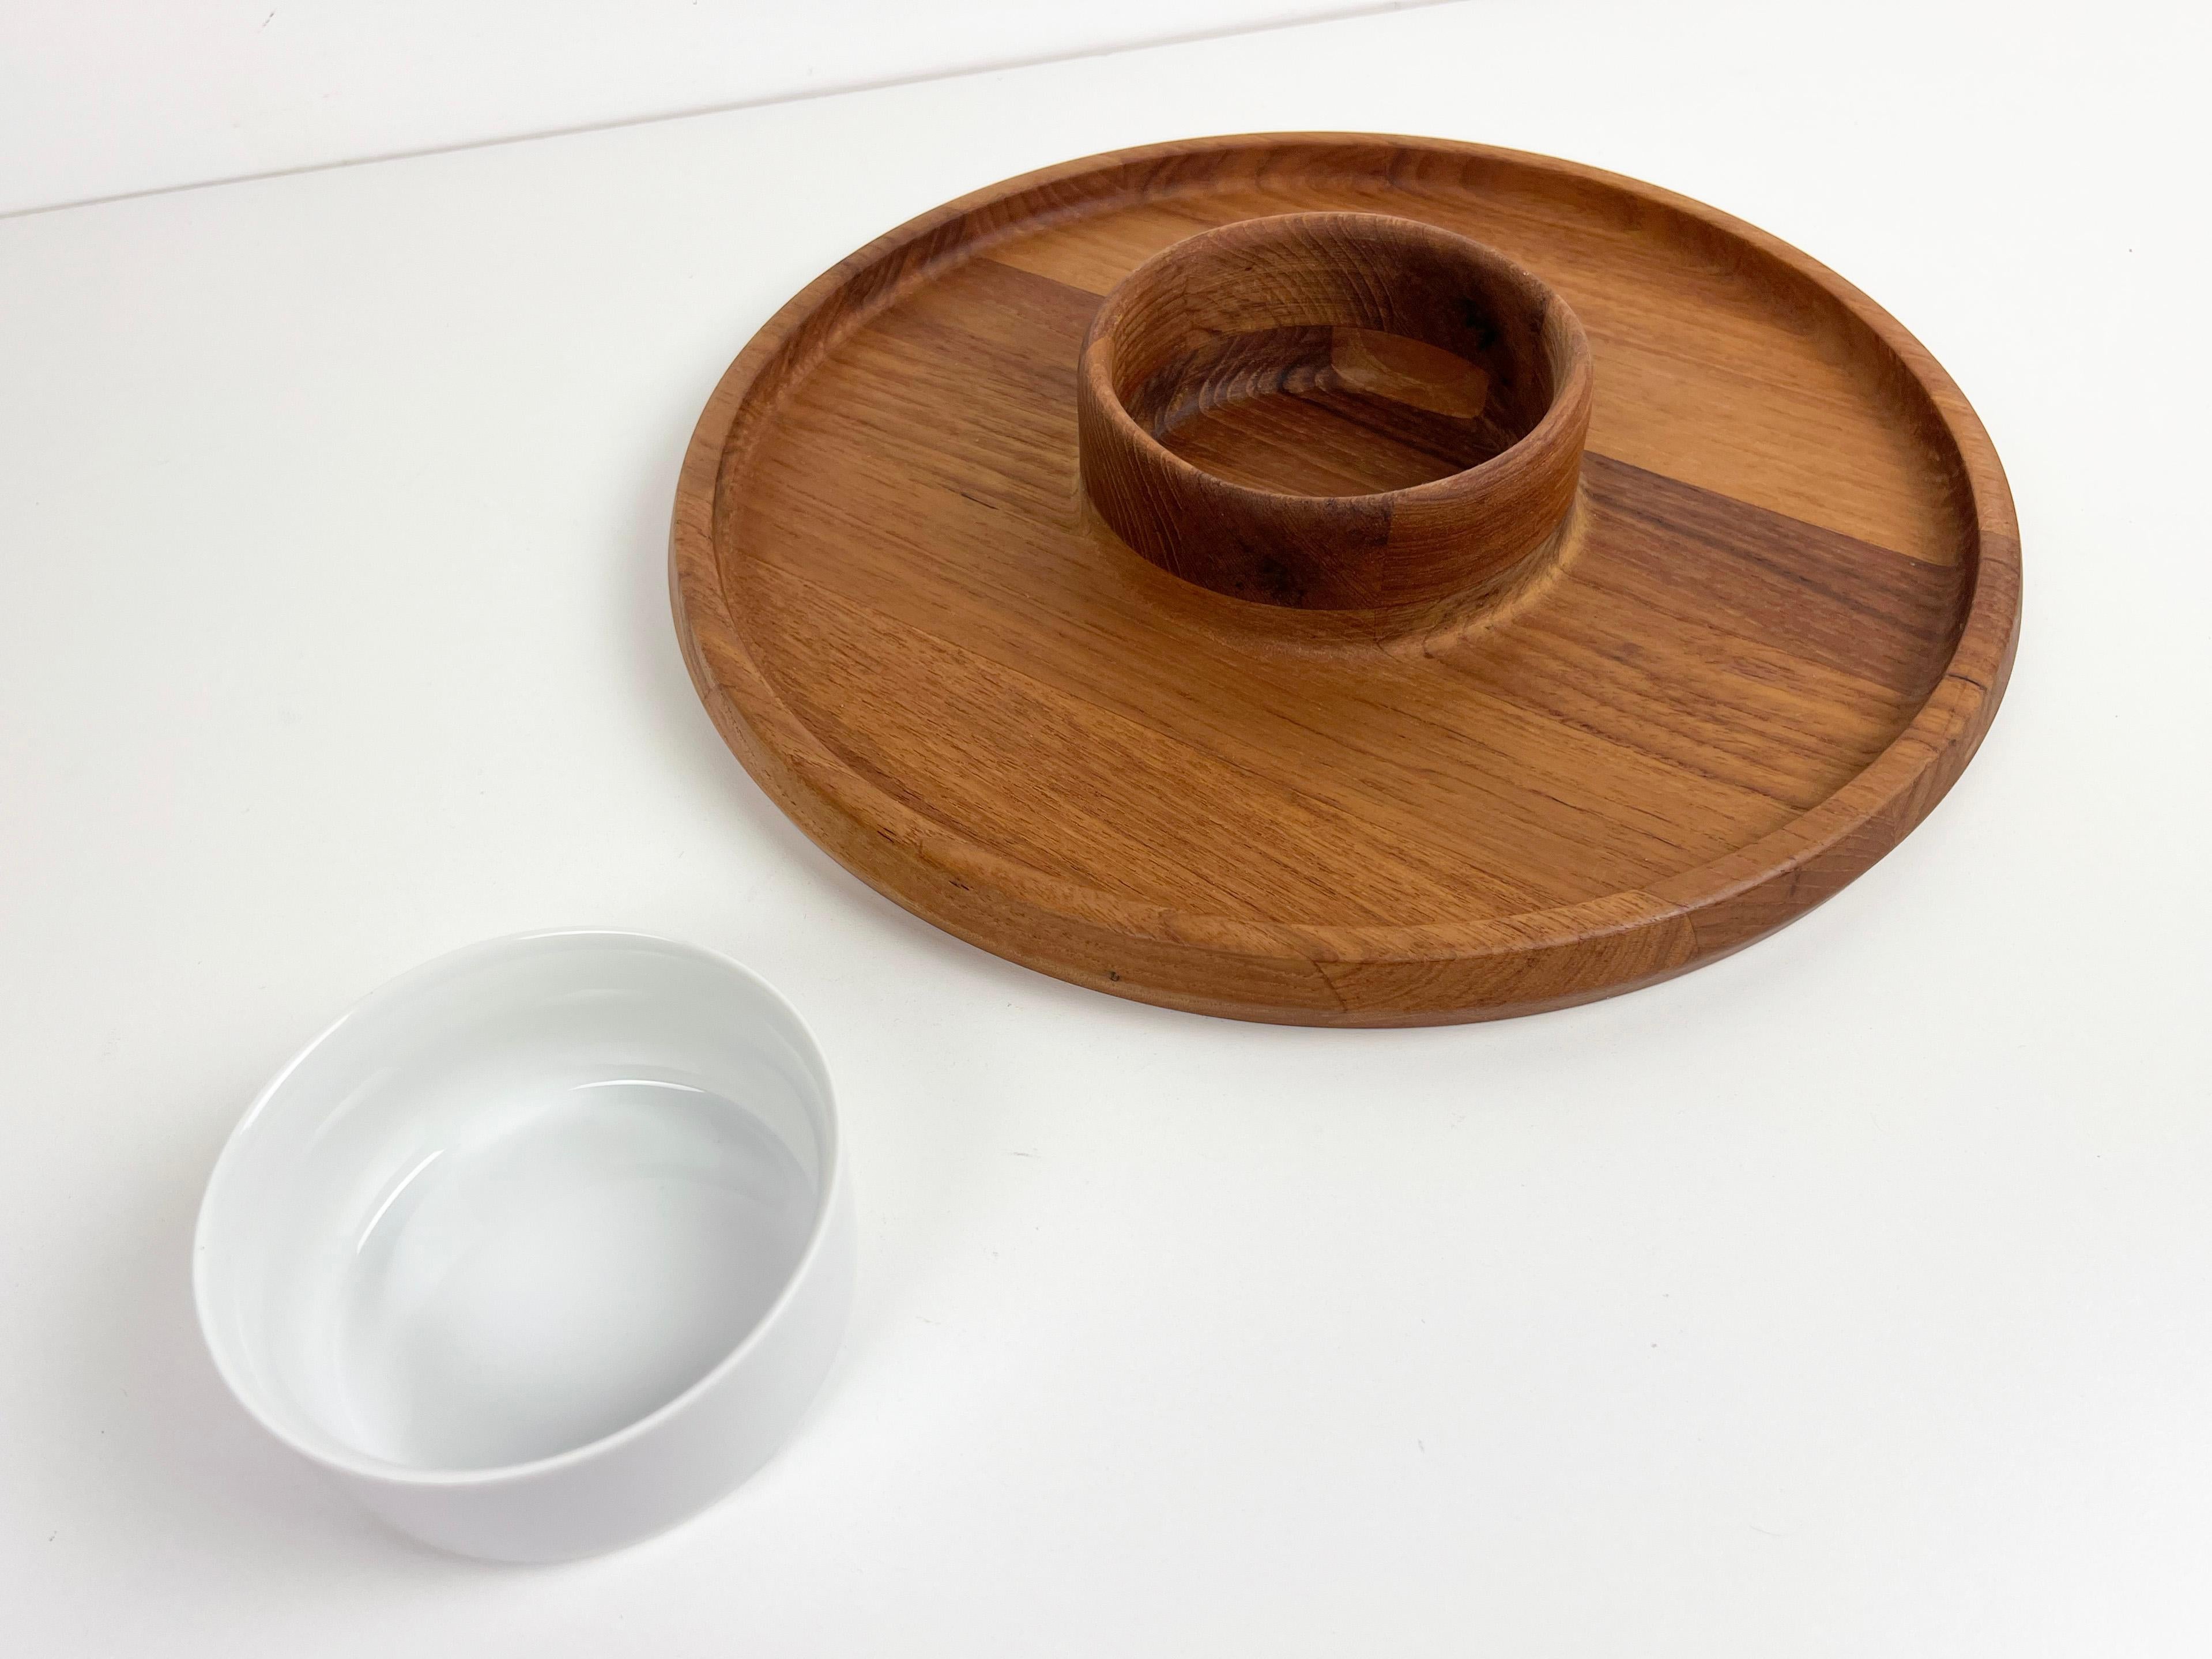 Dansk Round Teak Serving Tray with Ceramic Ramekin 2